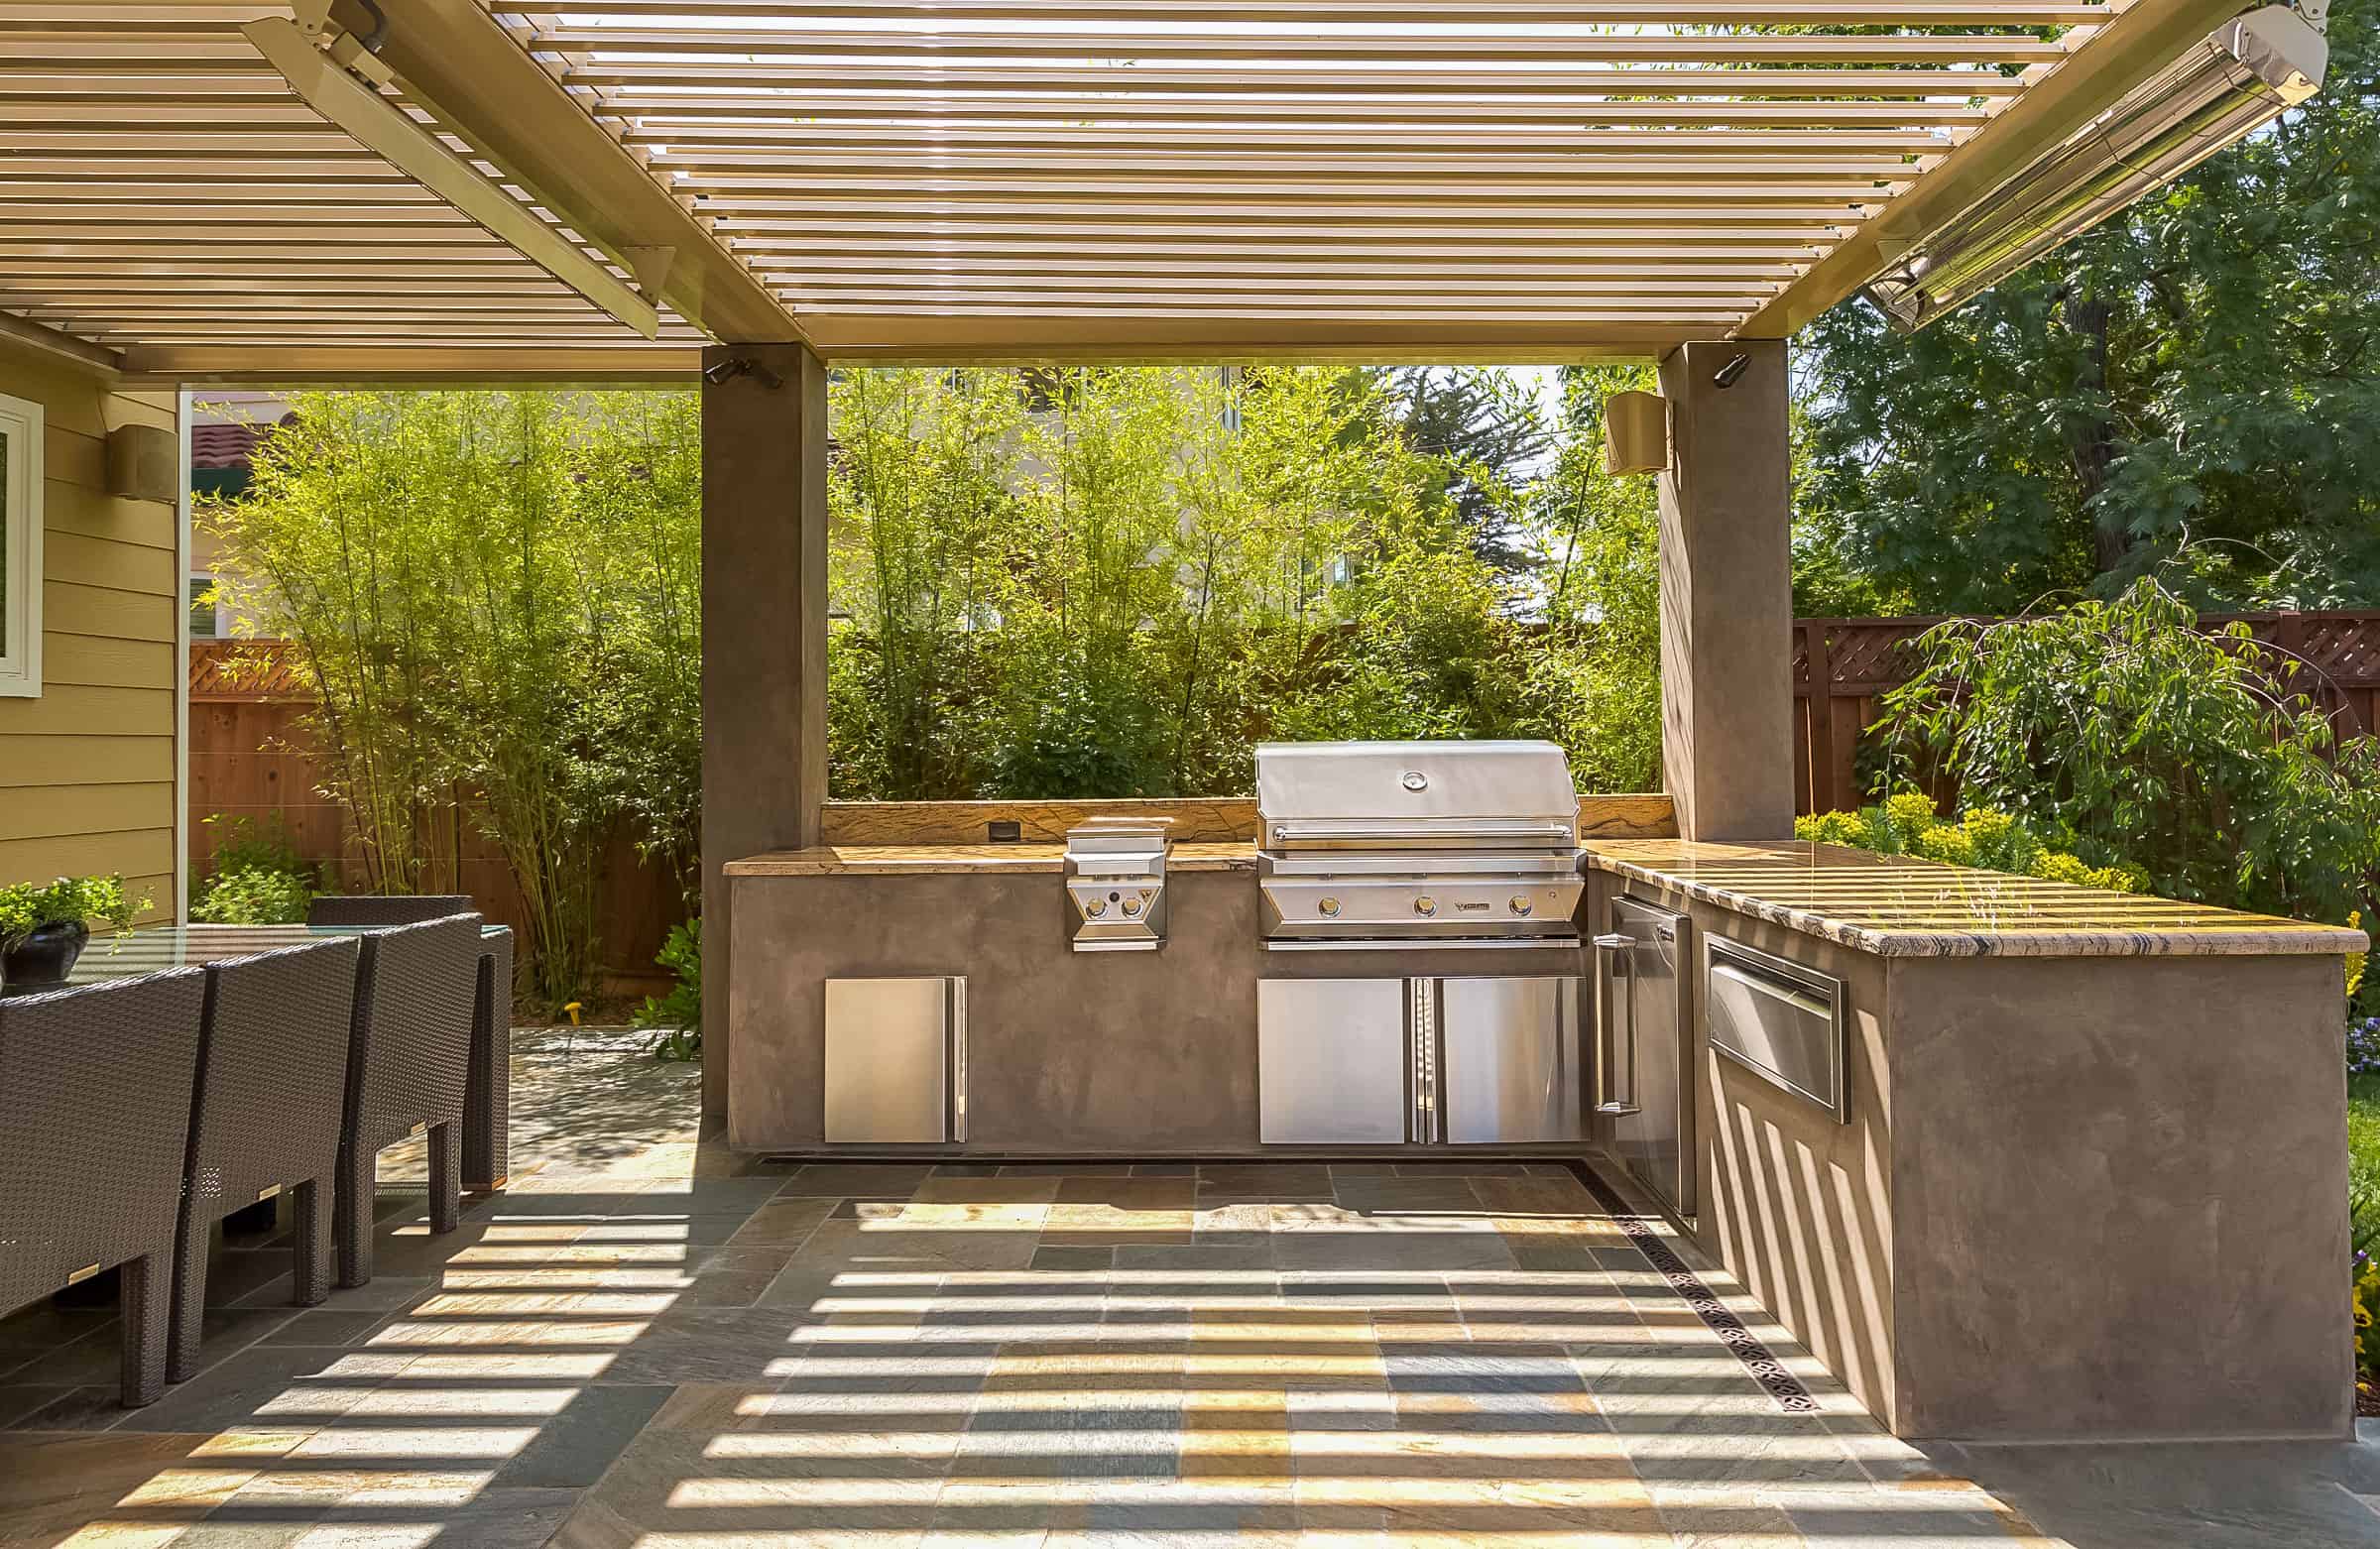 Pergolas by Julie - Pergola over a custom outdoor kitchen